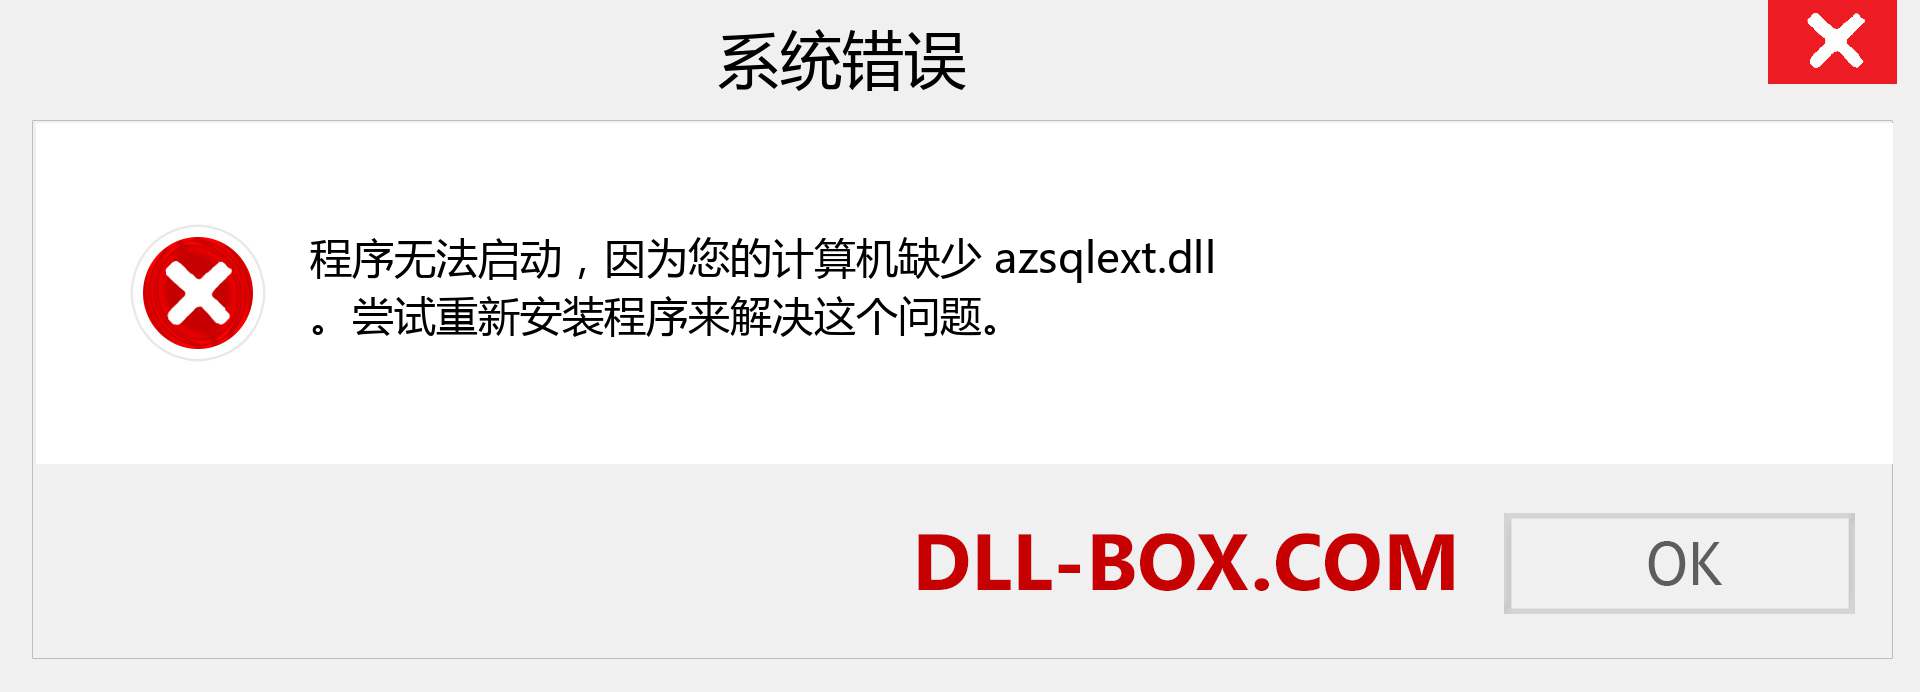 azsqlext.dll 文件丢失？。 适用于 Windows 7、8、10 的下载 - 修复 Windows、照片、图像上的 azsqlext dll 丢失错误